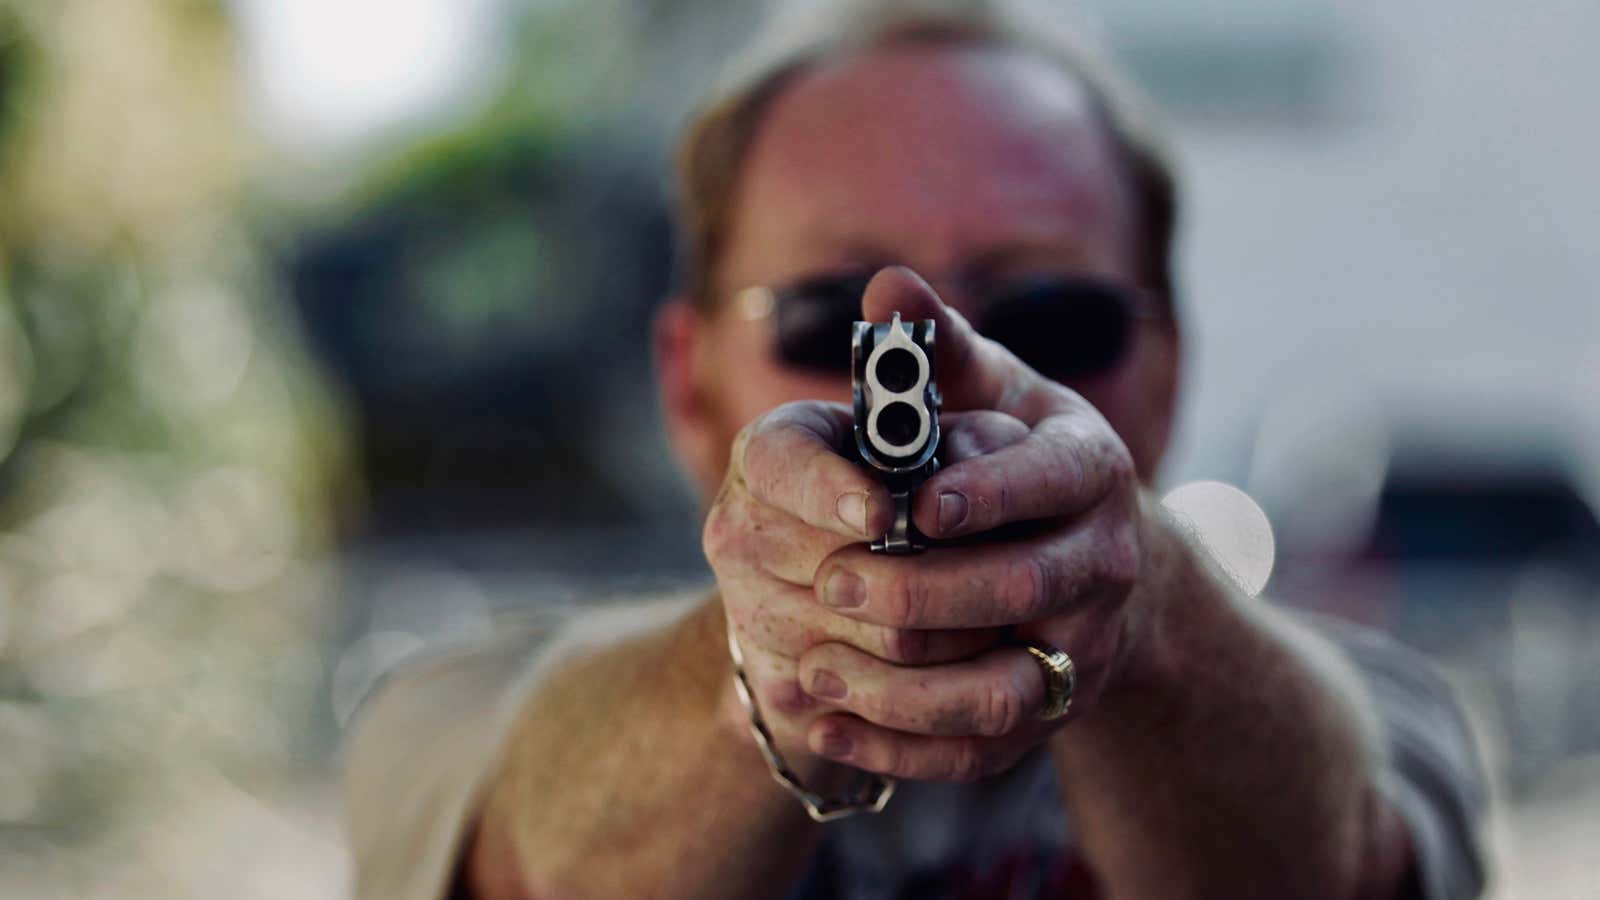 This Florida man has a gun range at home, thanks to a legal loophole.